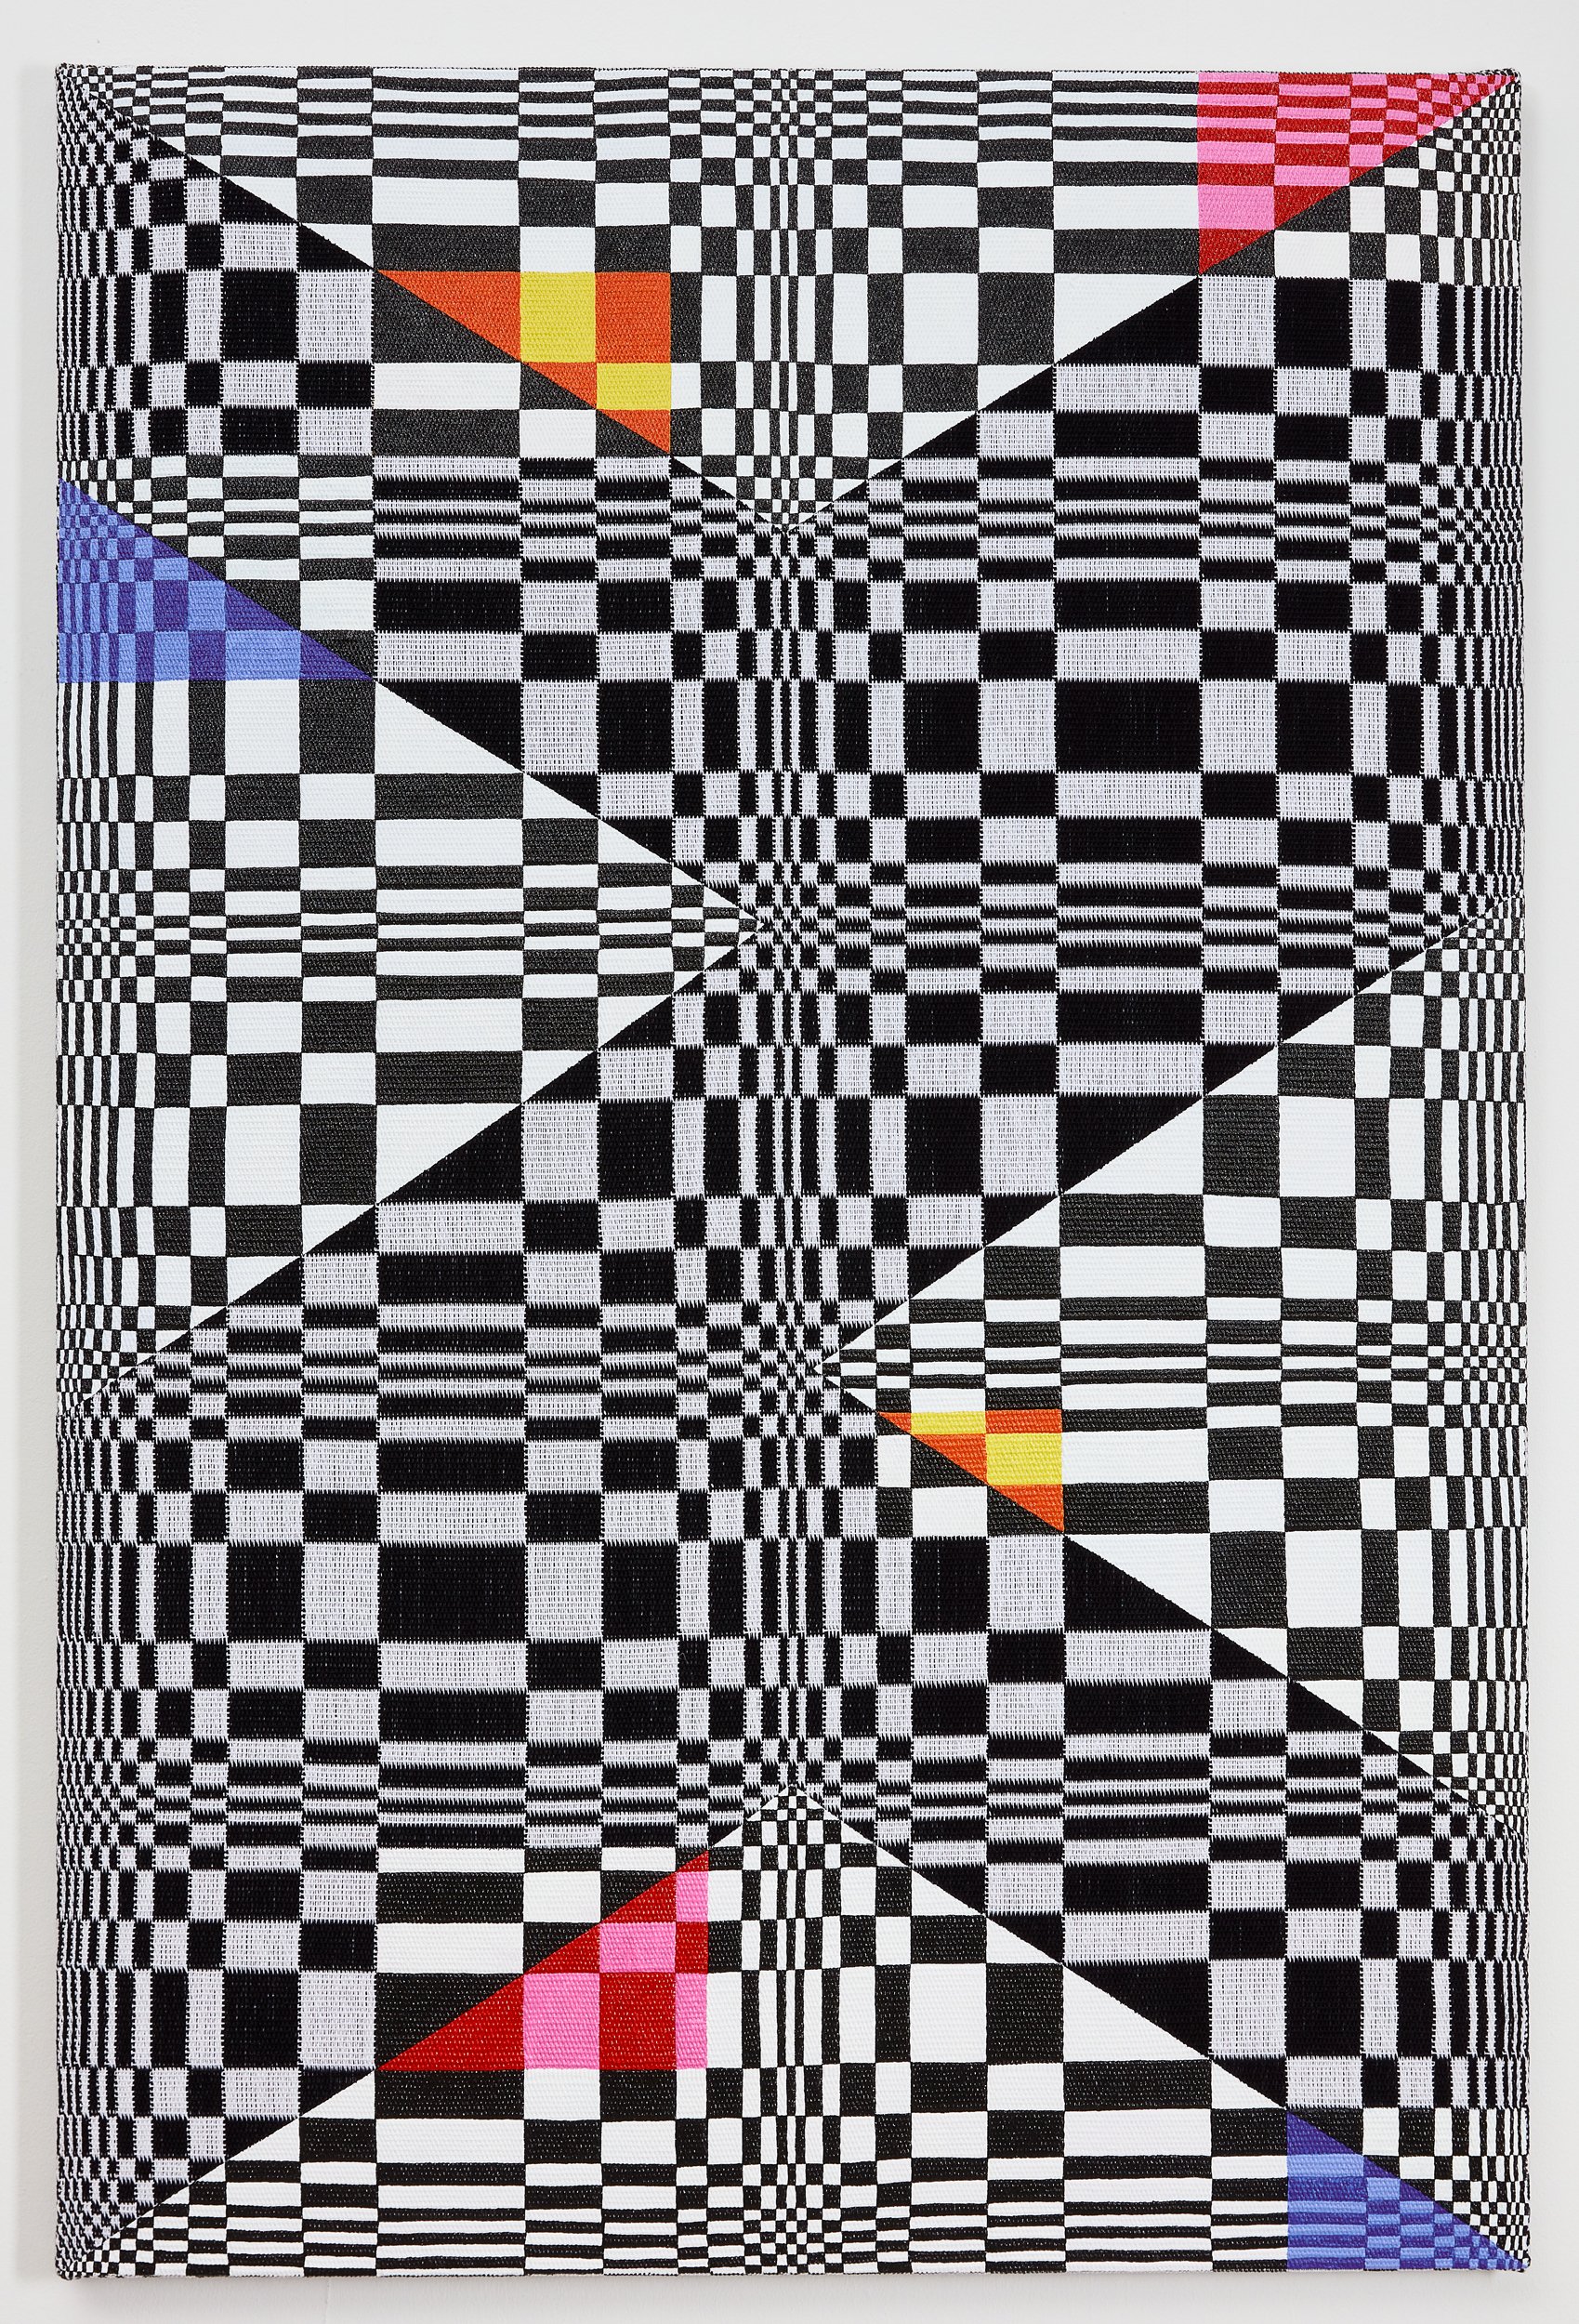 Samantha Bittman, Untitled, 2020, acrylic on hand-woven textile, 48 x 32 in, 121.9 x 81.3 cm, (SBi302541) LR